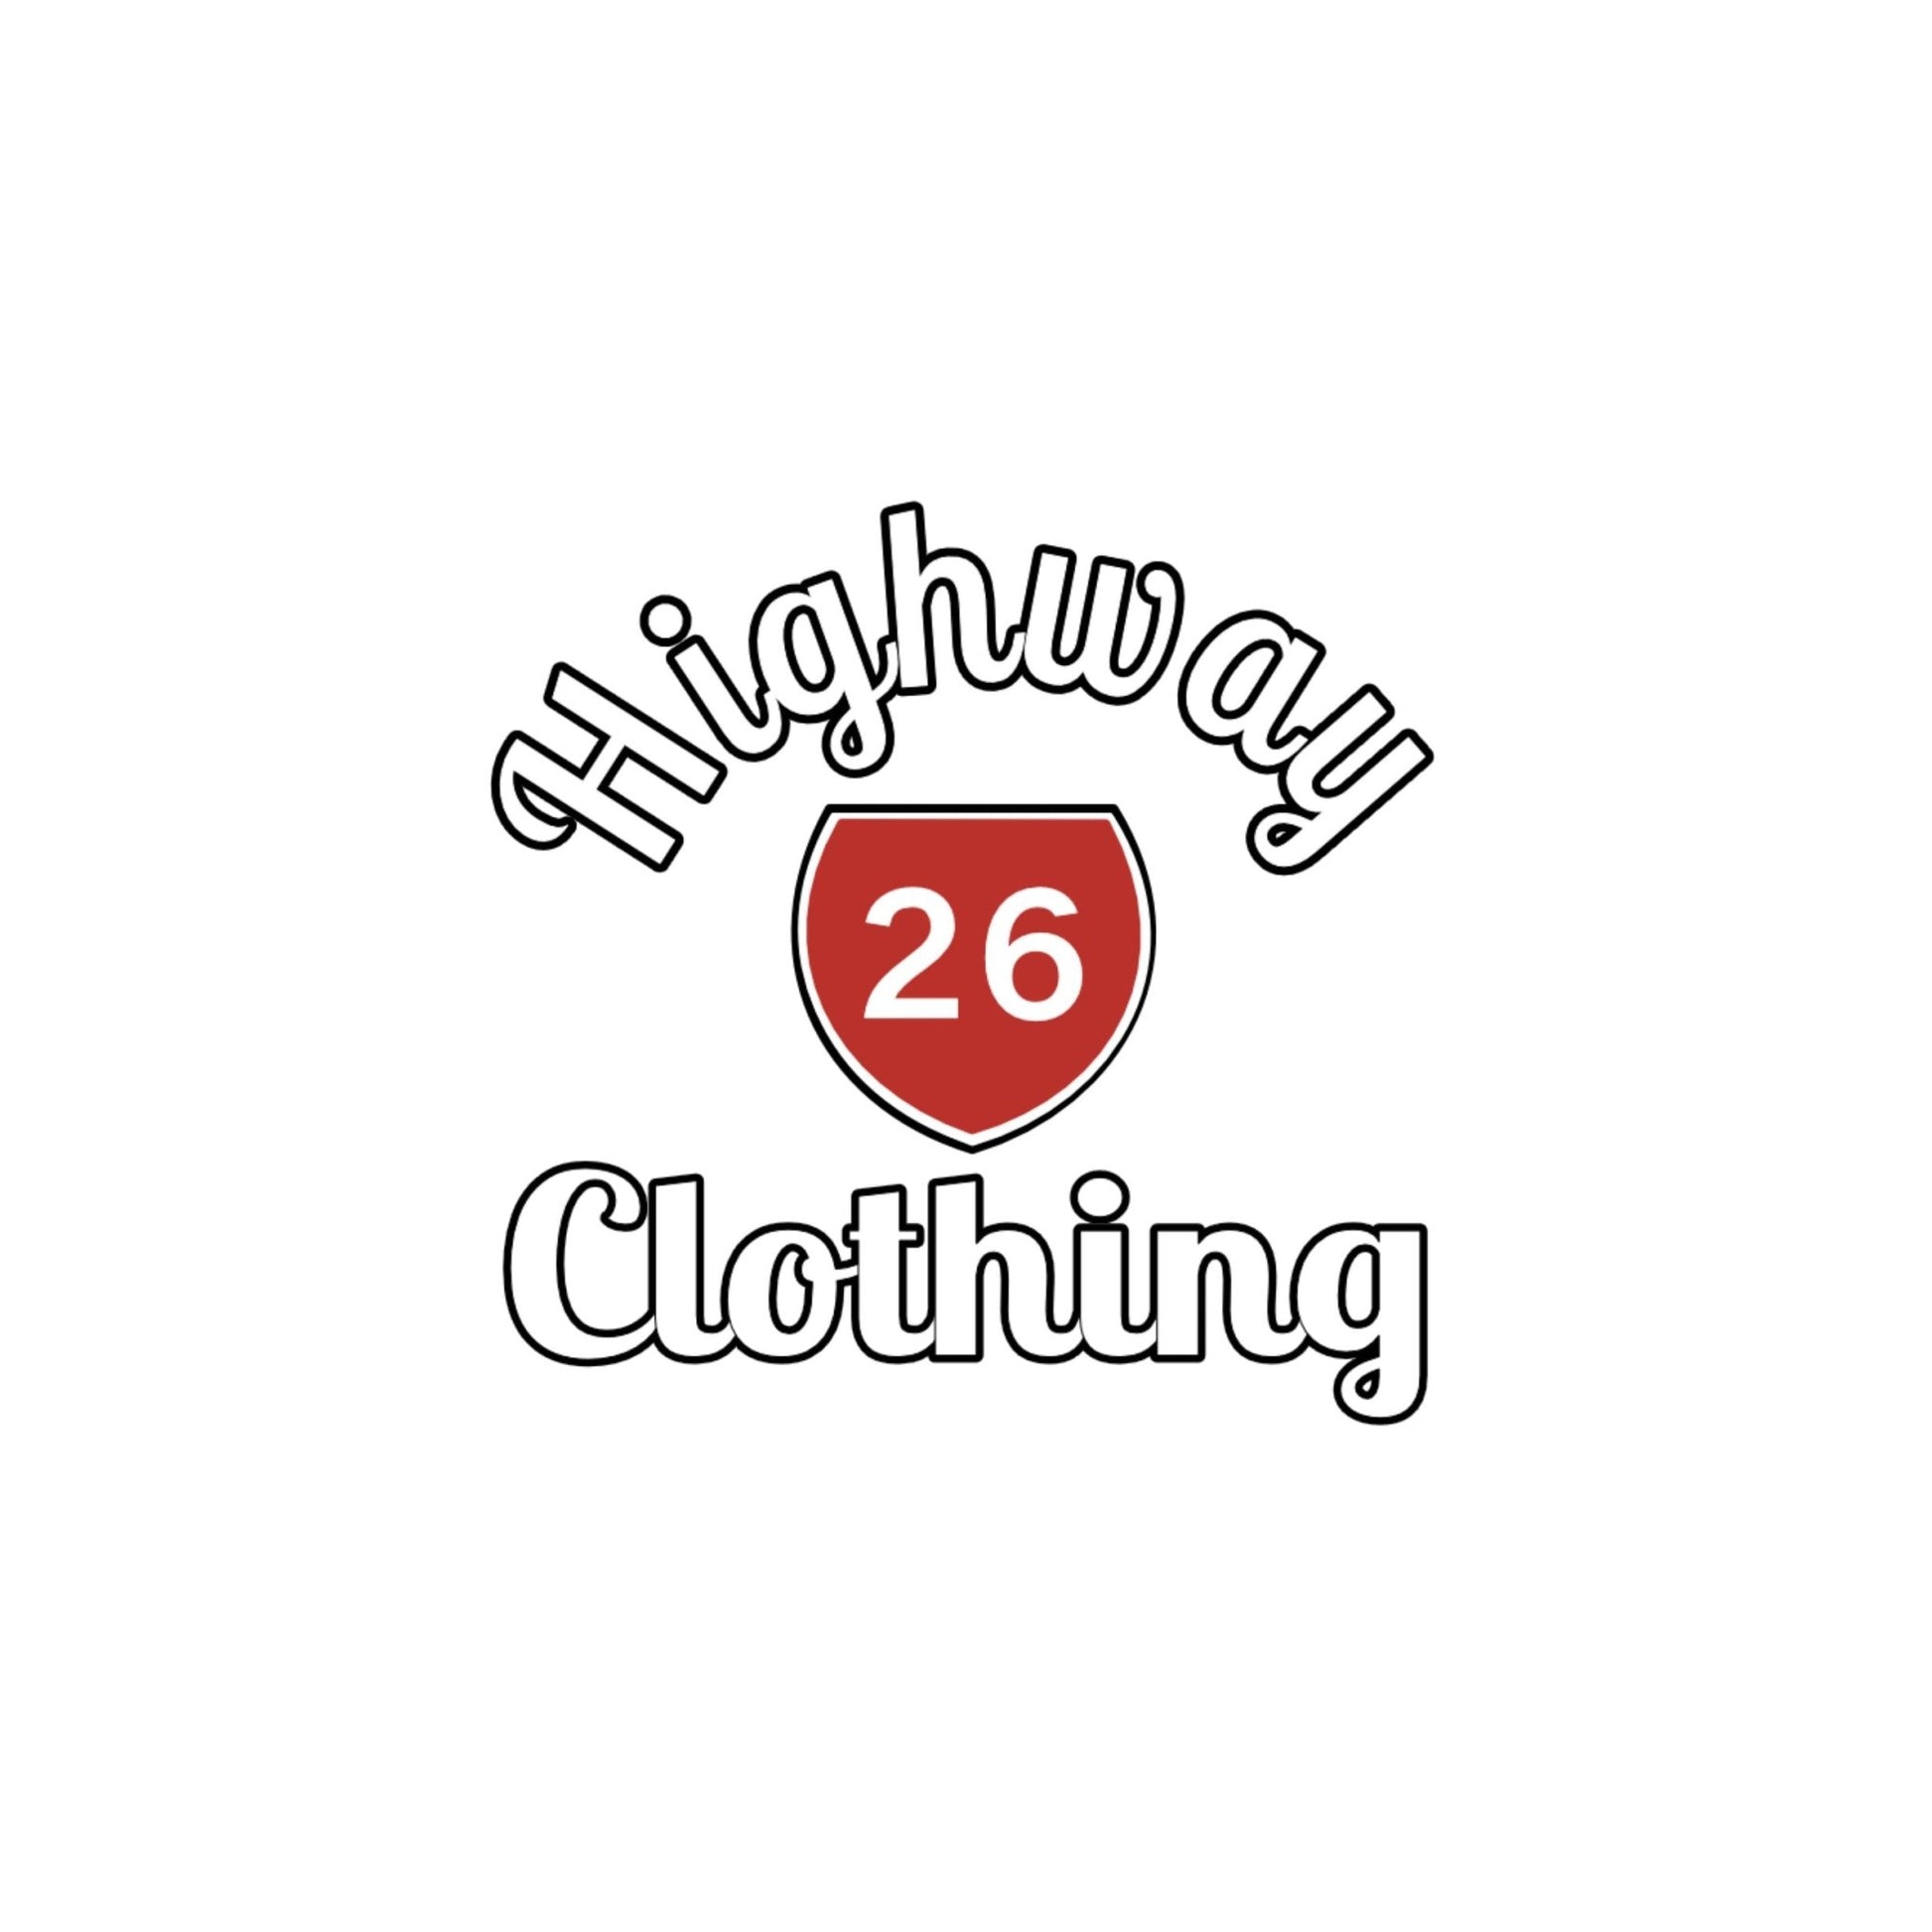 Chevy sedan t-shirt and short set - Highway 26 Clothing